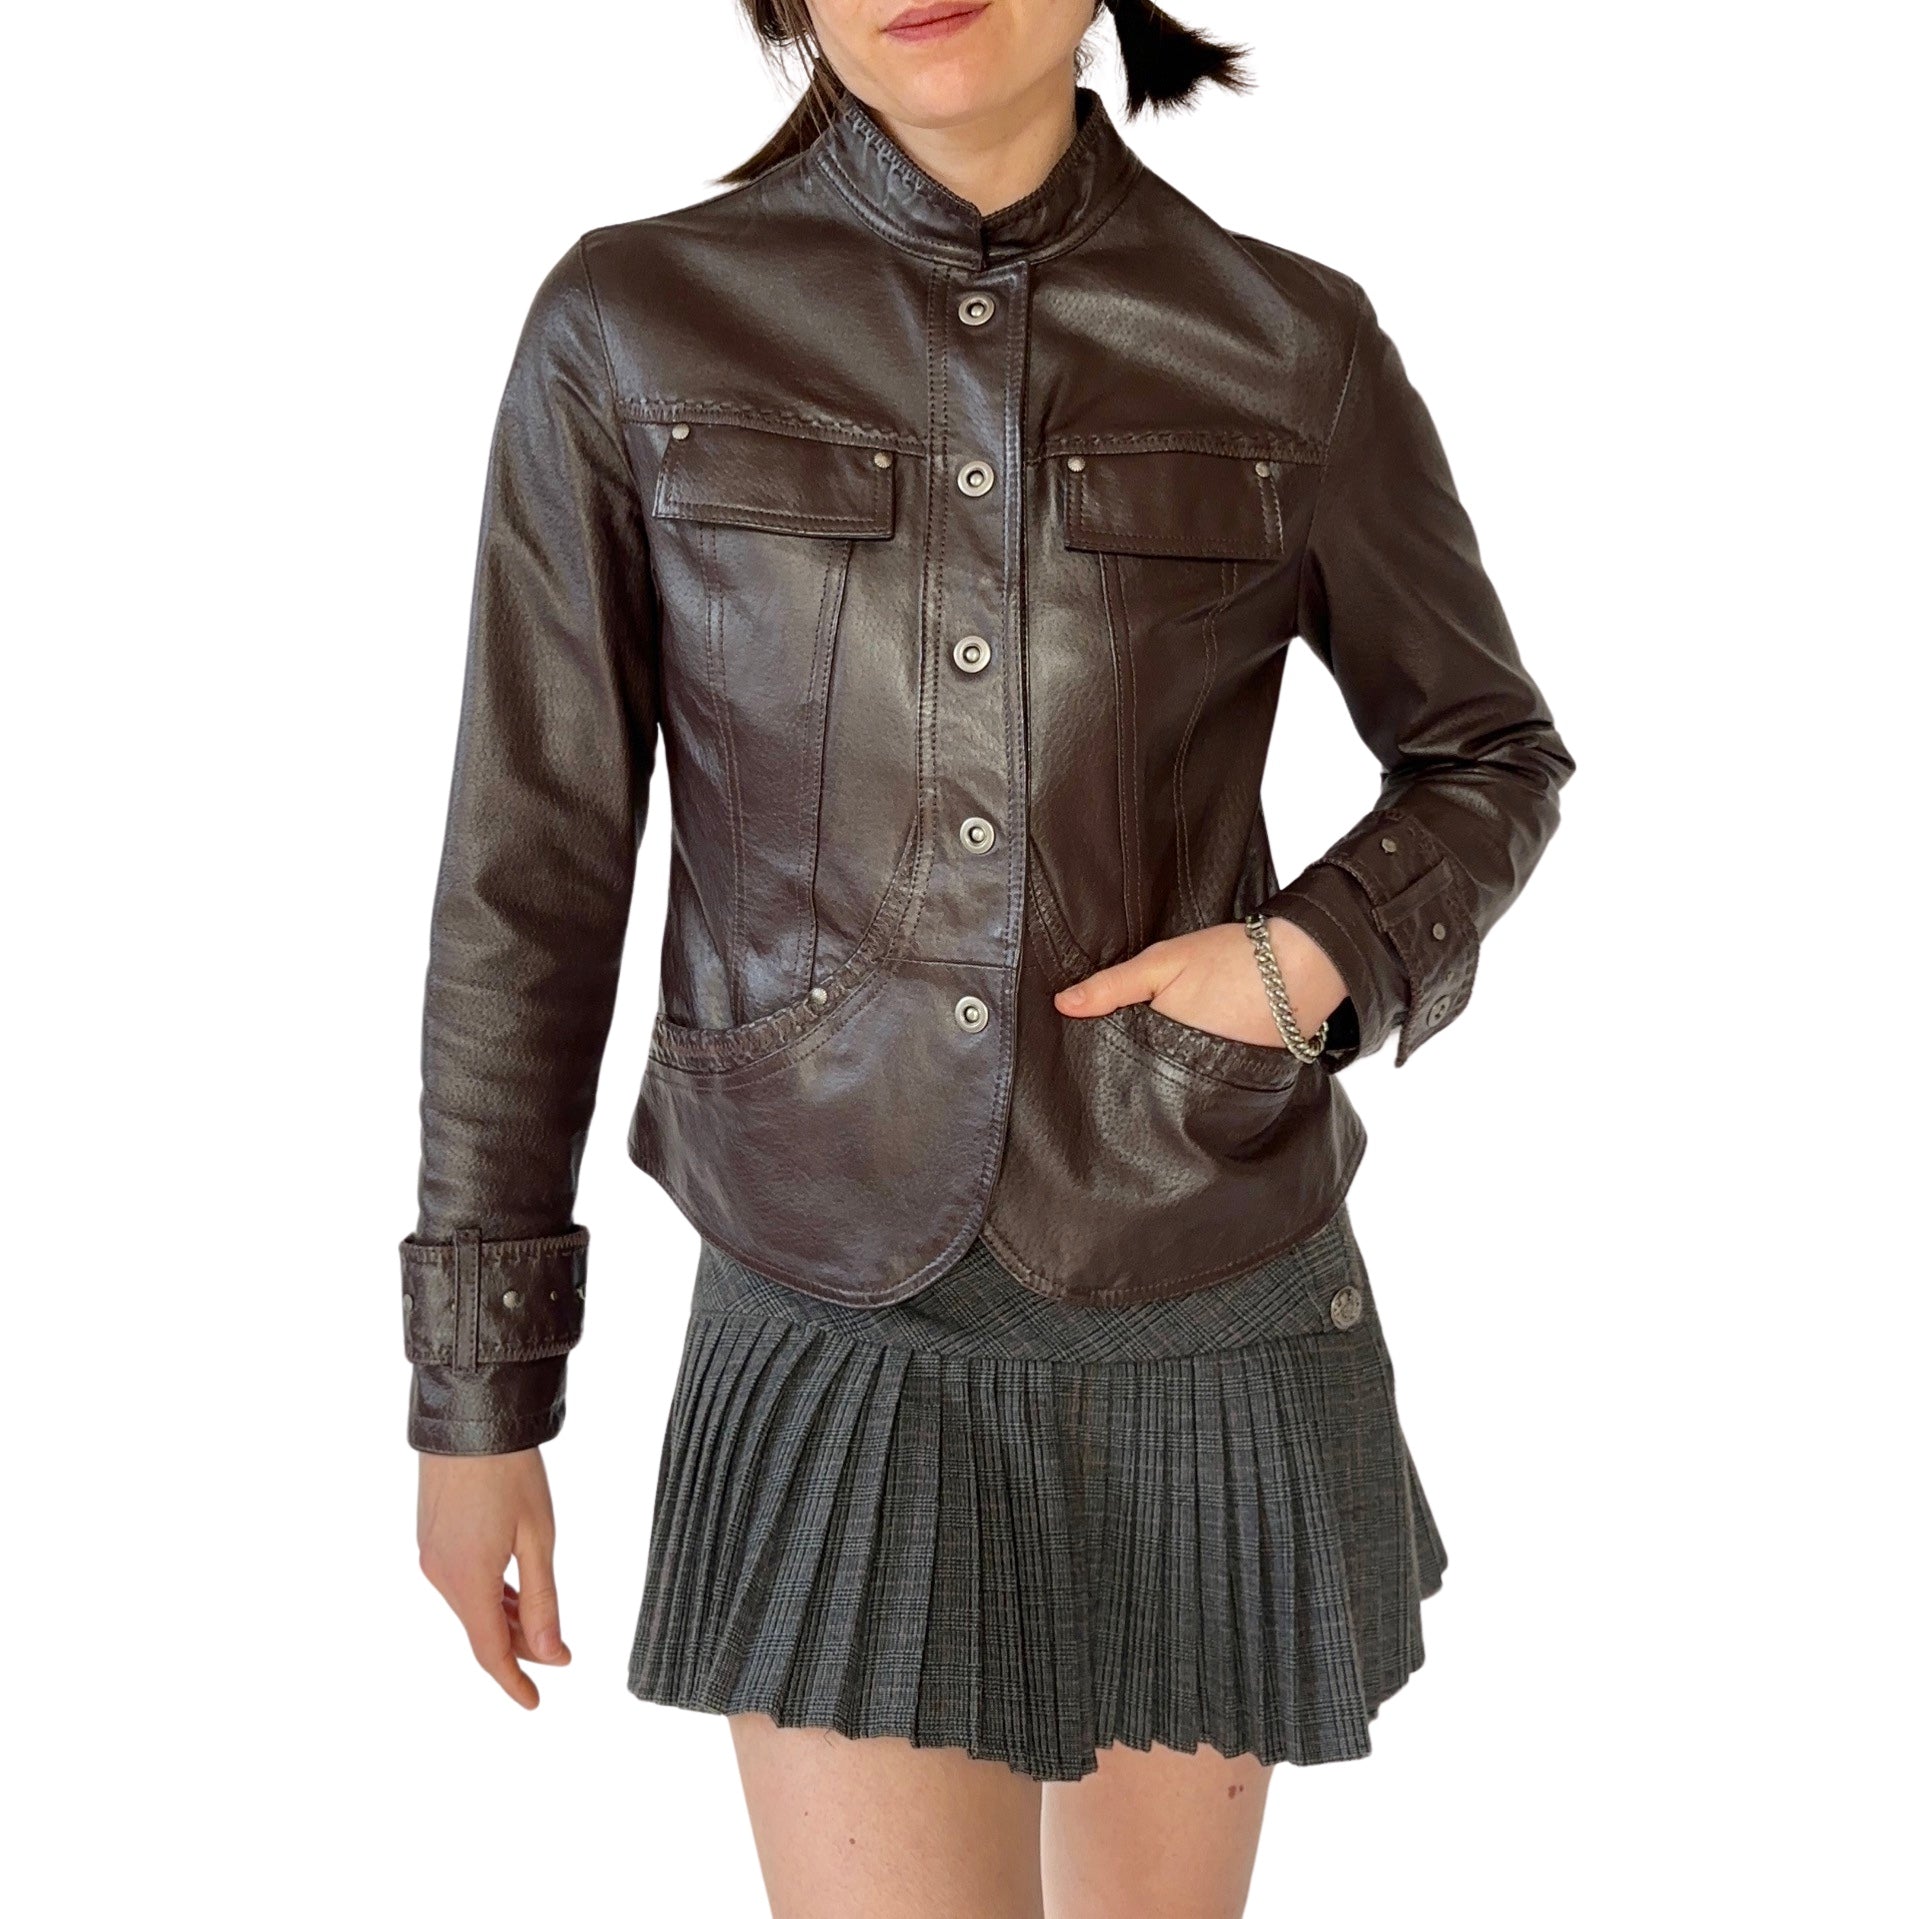 2000s Leather Jacket (S)